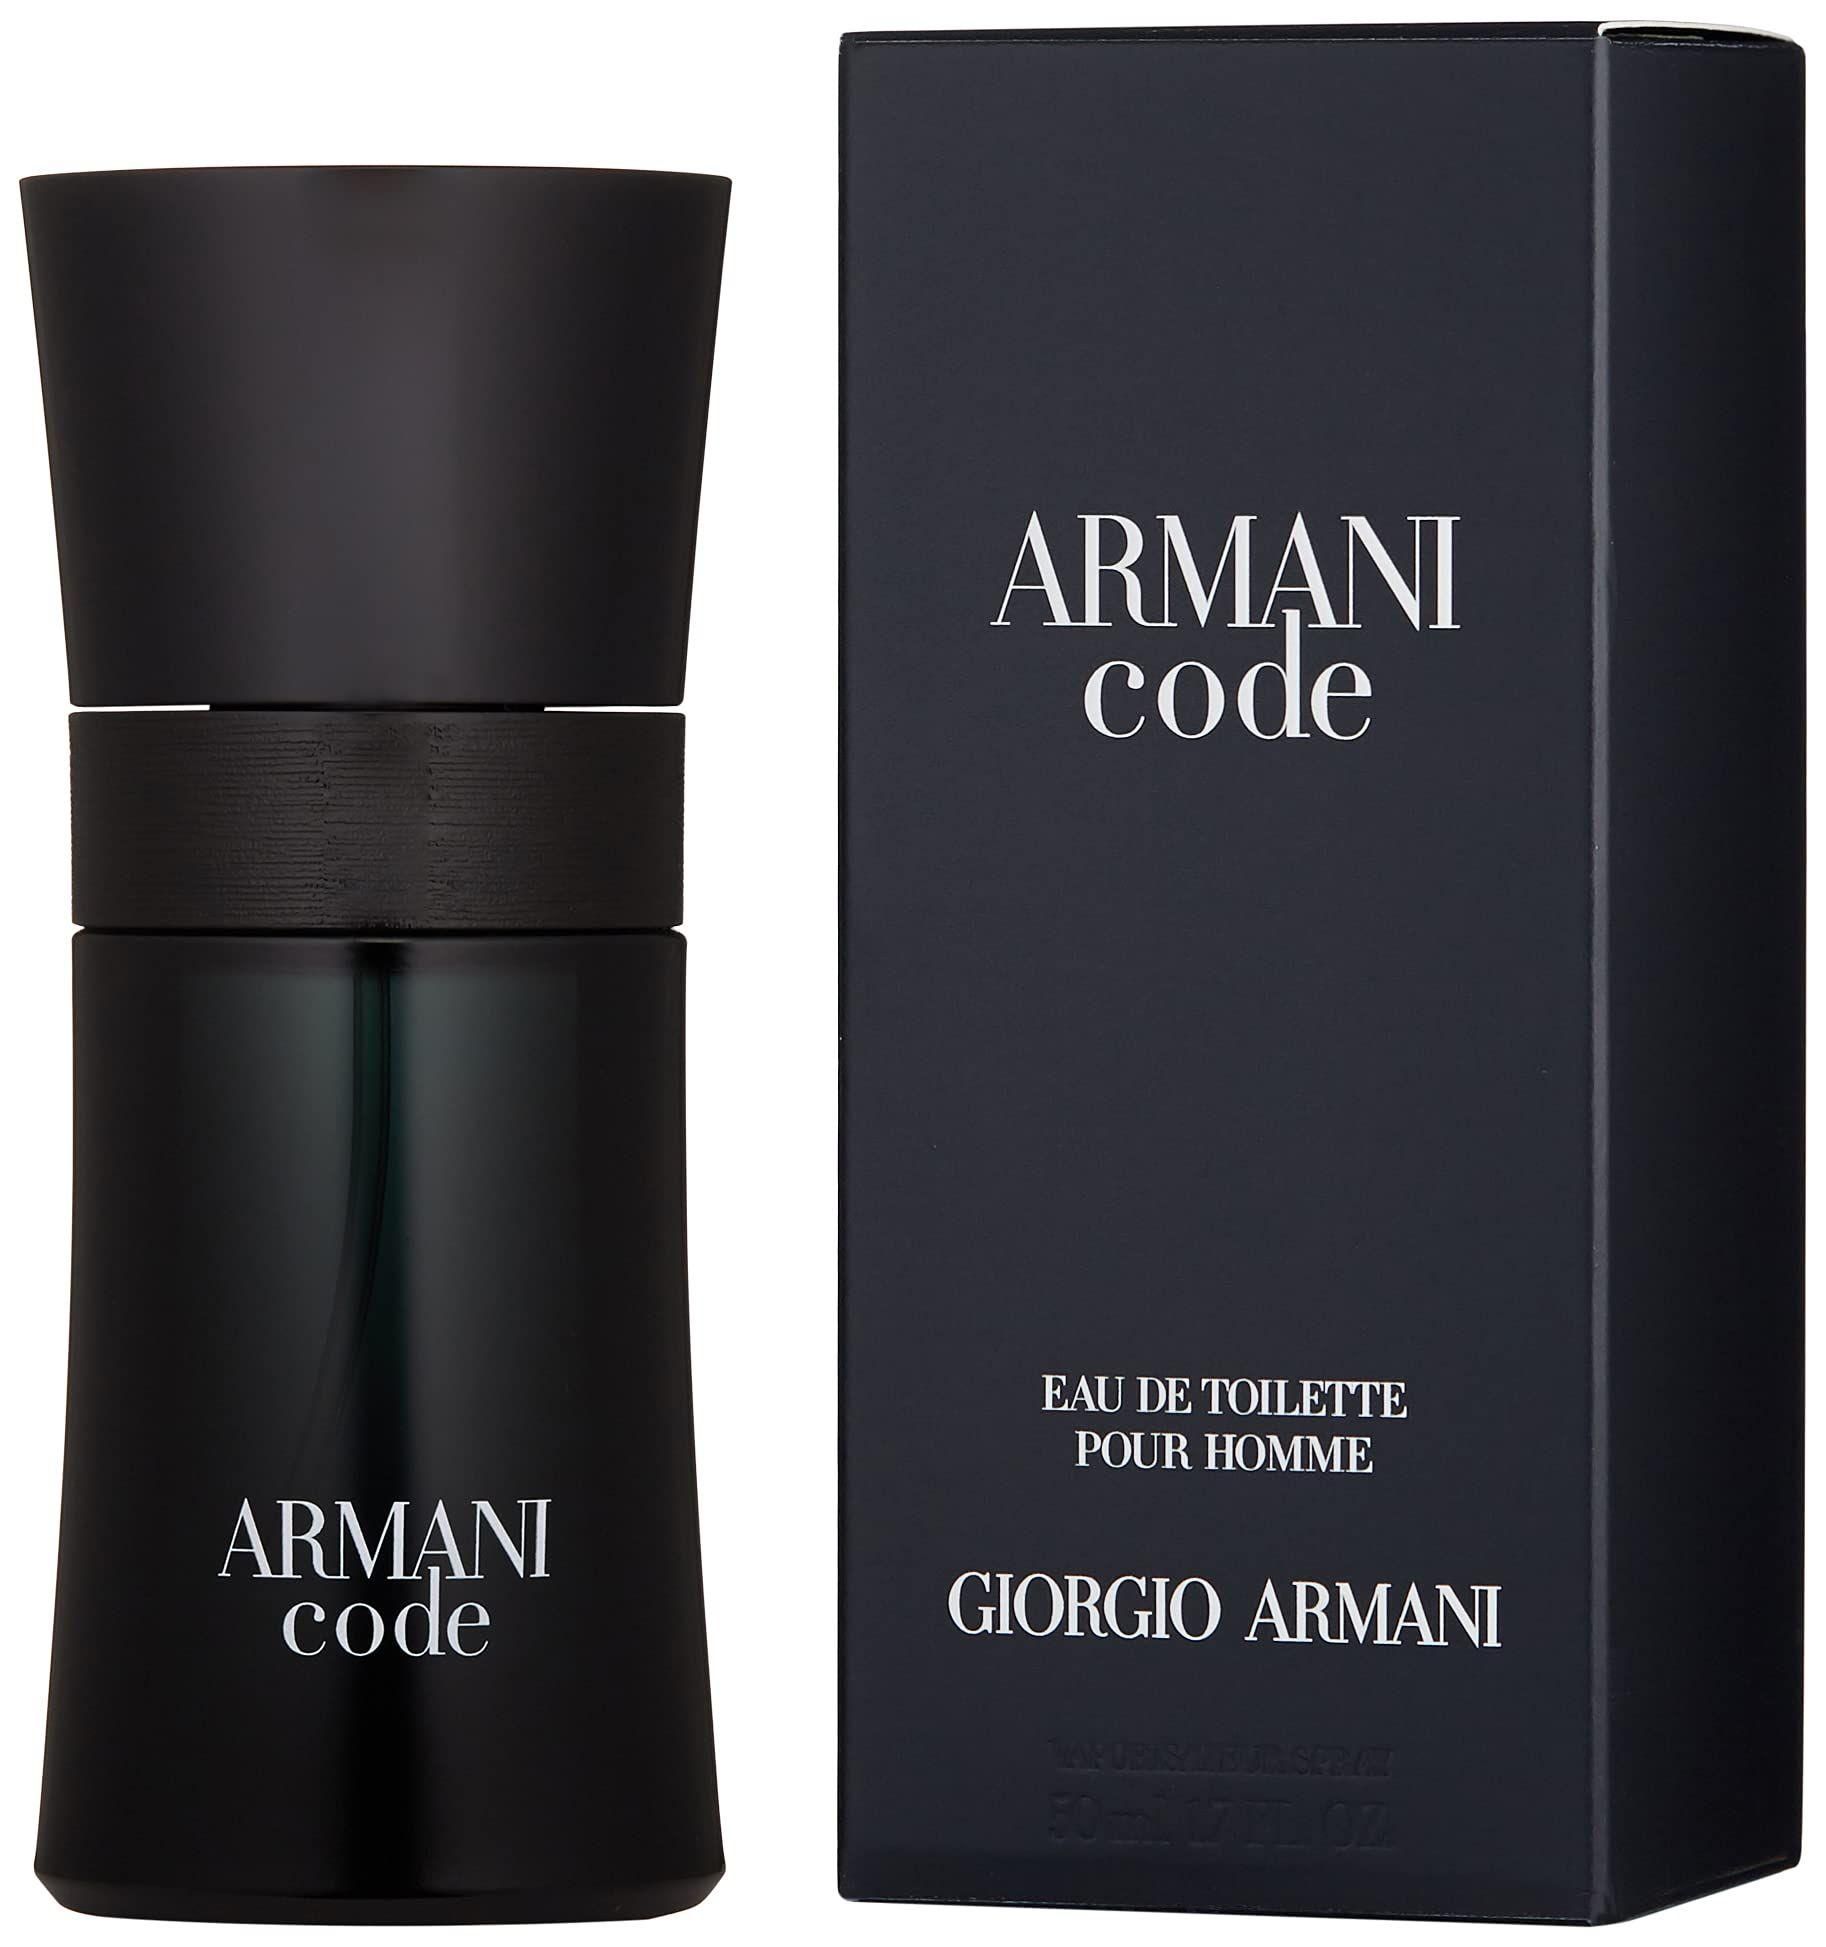 Code homme. Armani code for women Giorgio Armani. Giorgio Armani Black code for men. Giorgio Armani Black code. Armani Black code мужской.